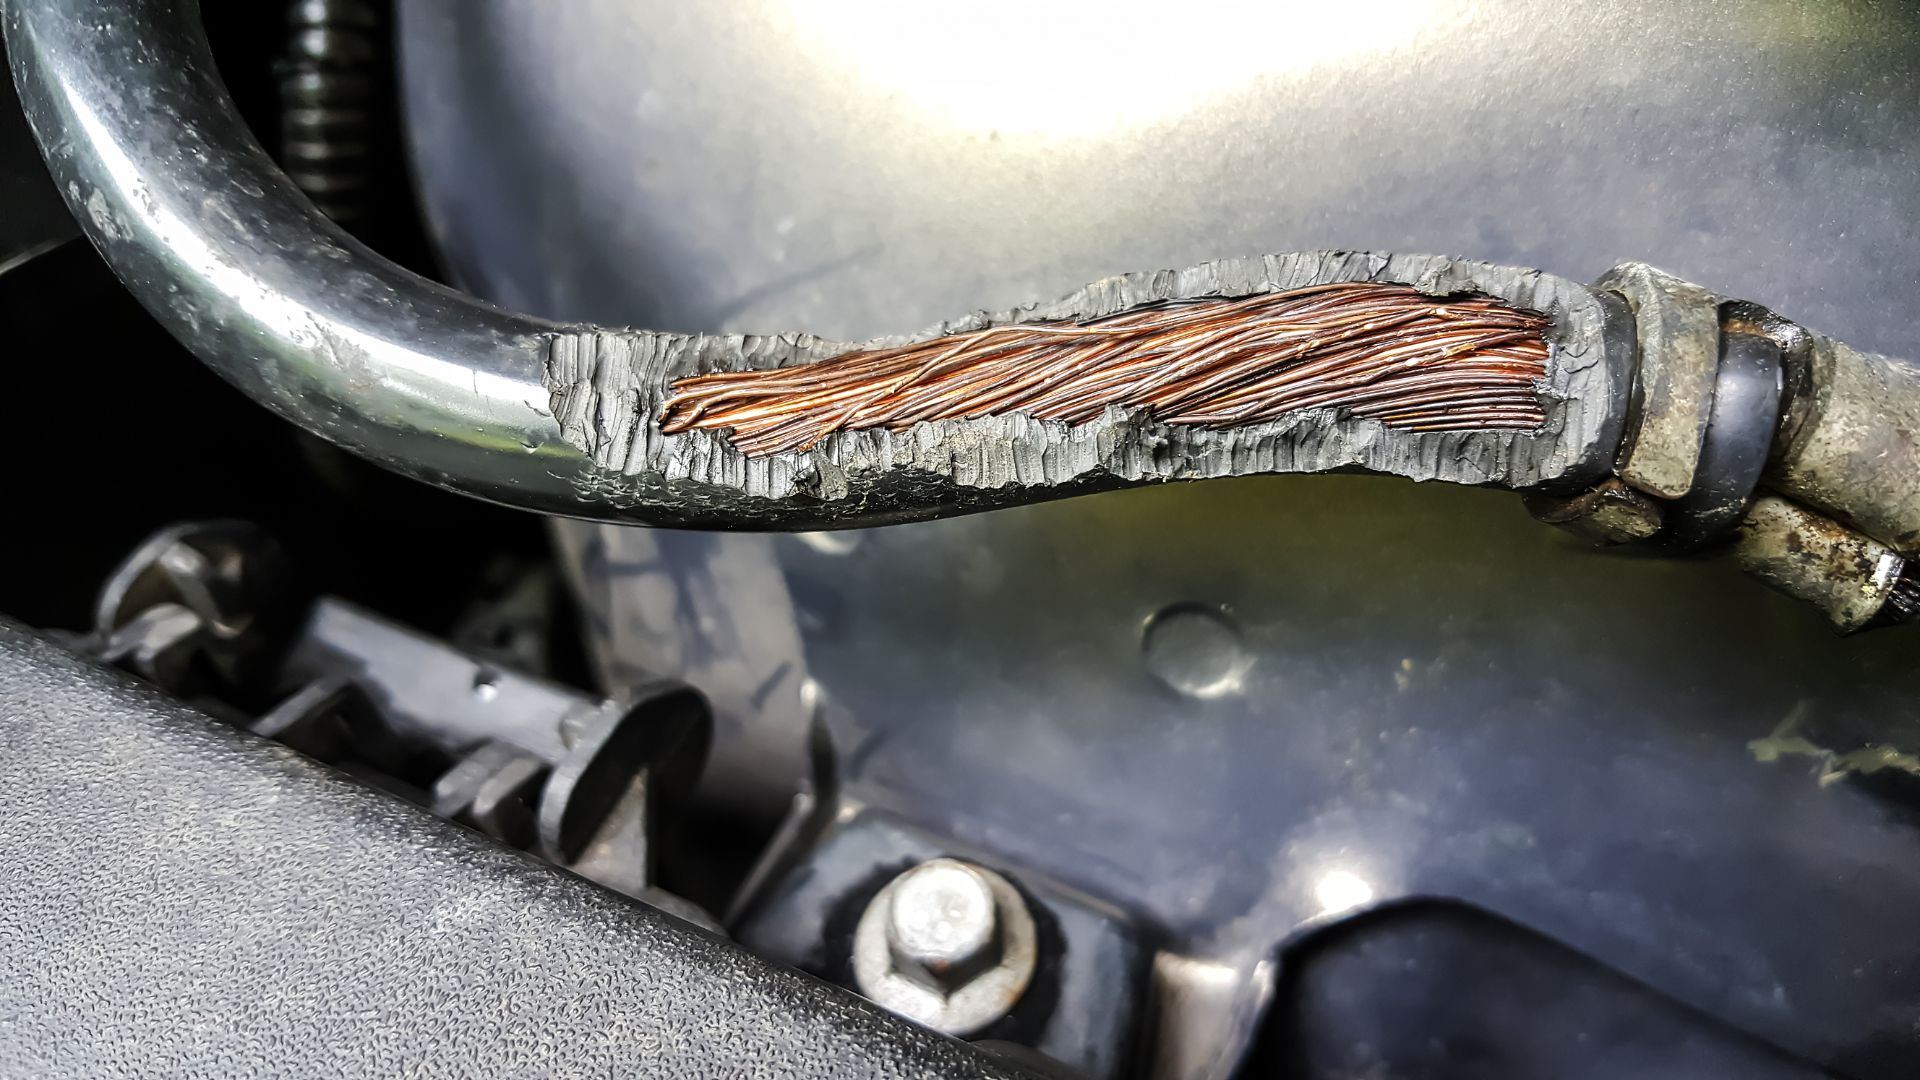 Ecotricity car charger rat problem